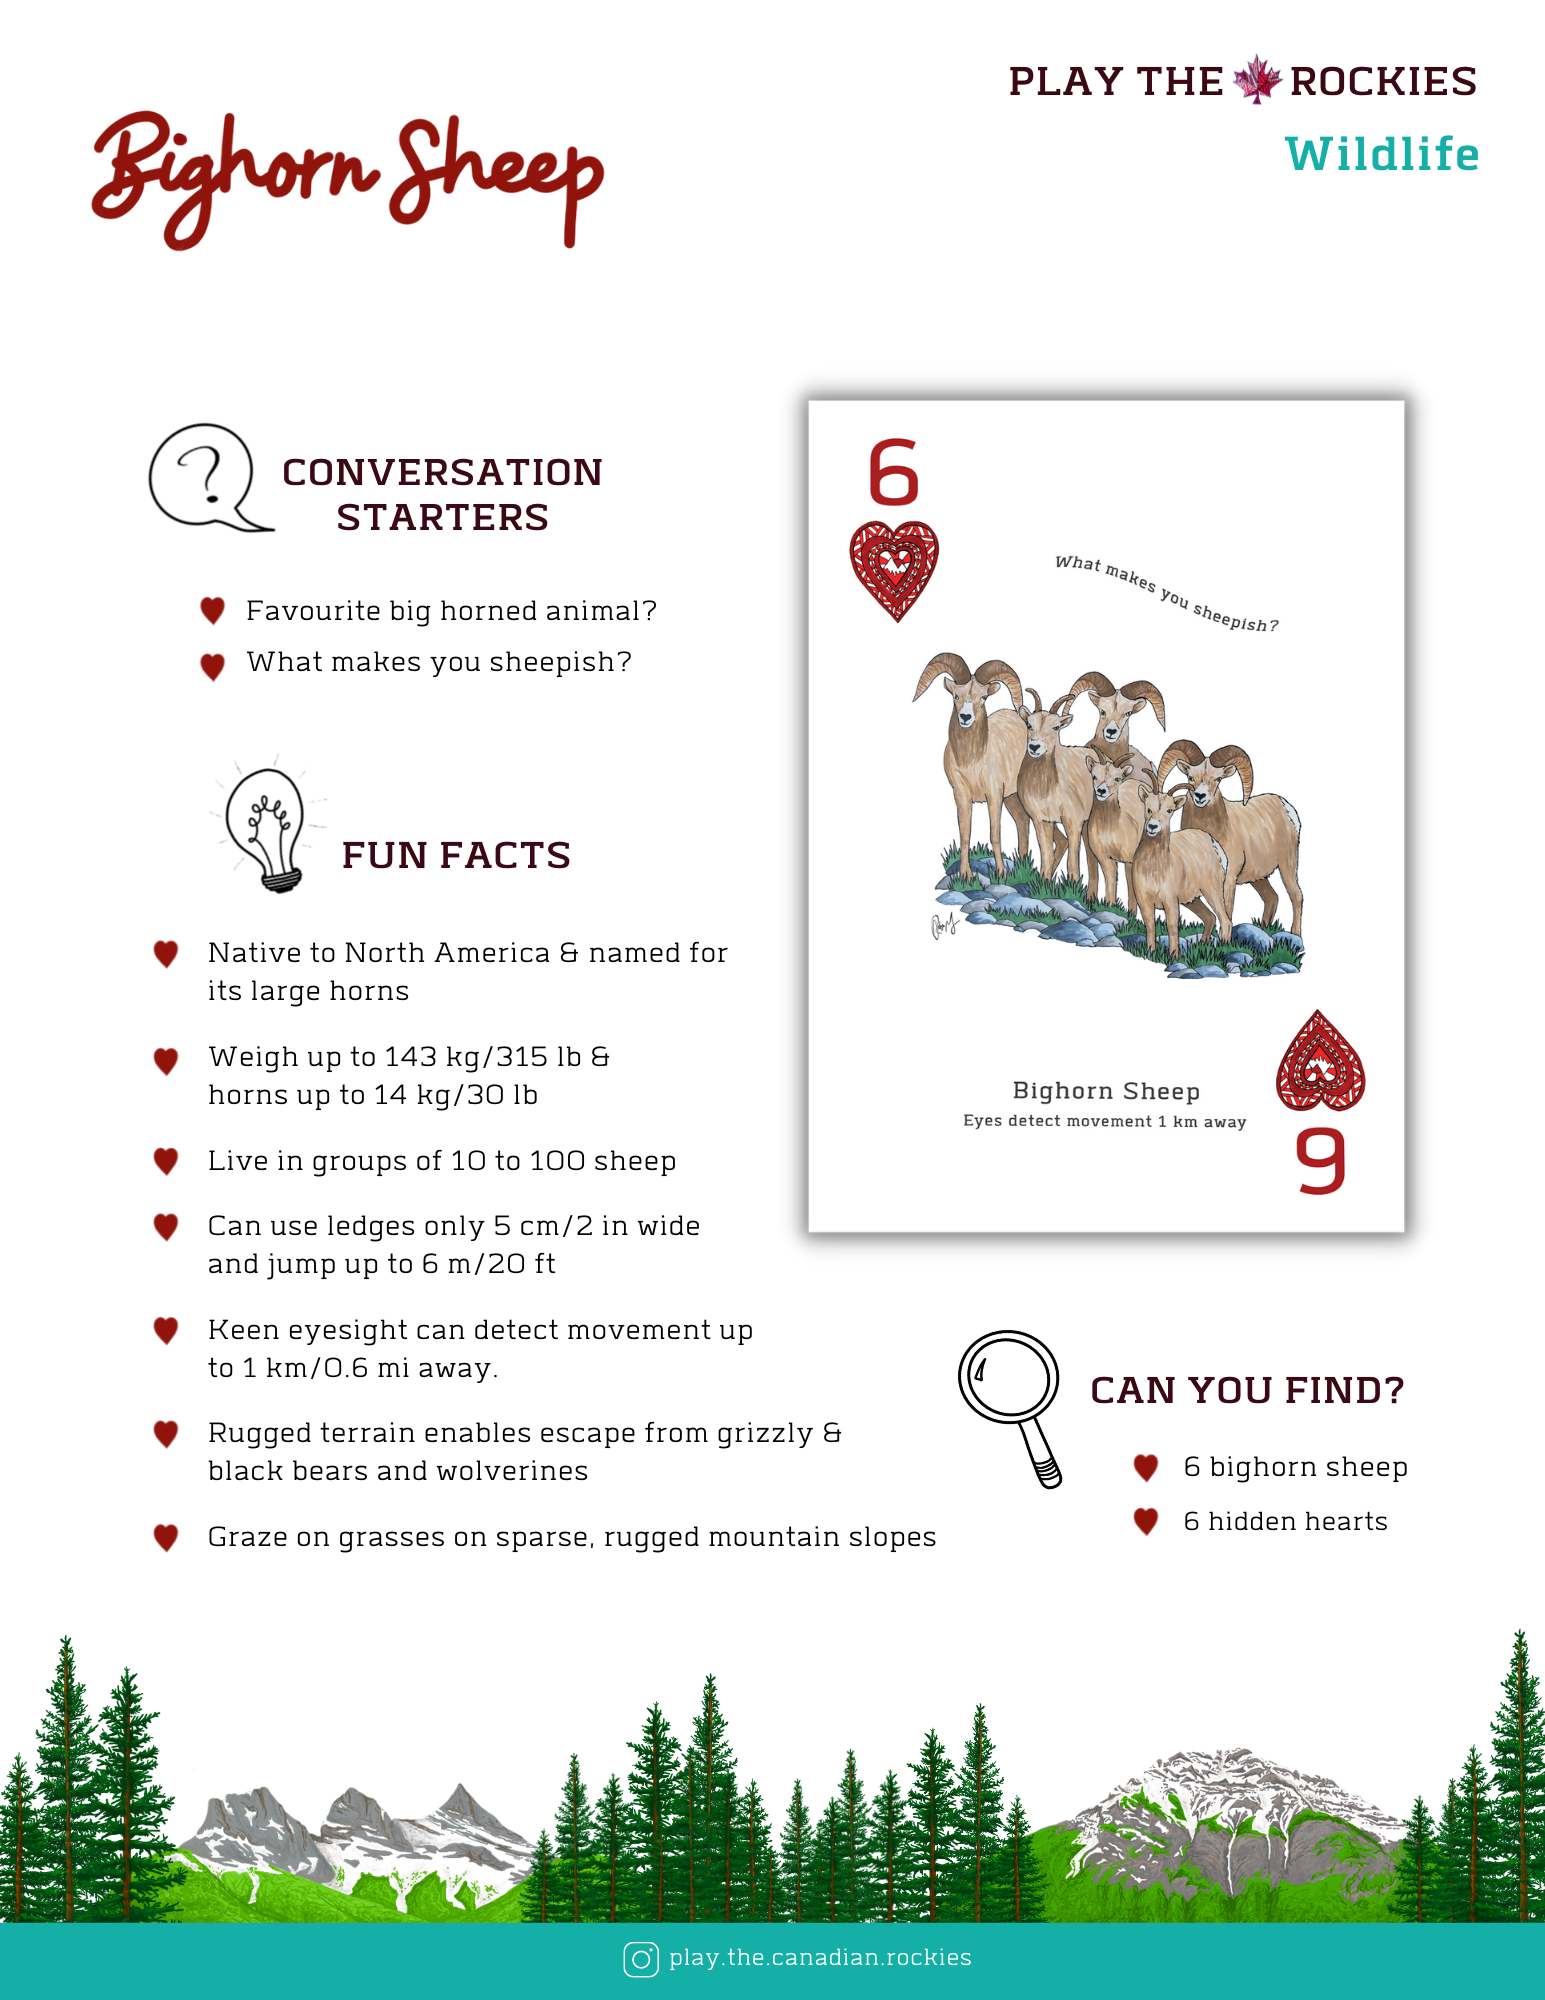 6 Big Horned Sheep - Wildlife - Information Sheet